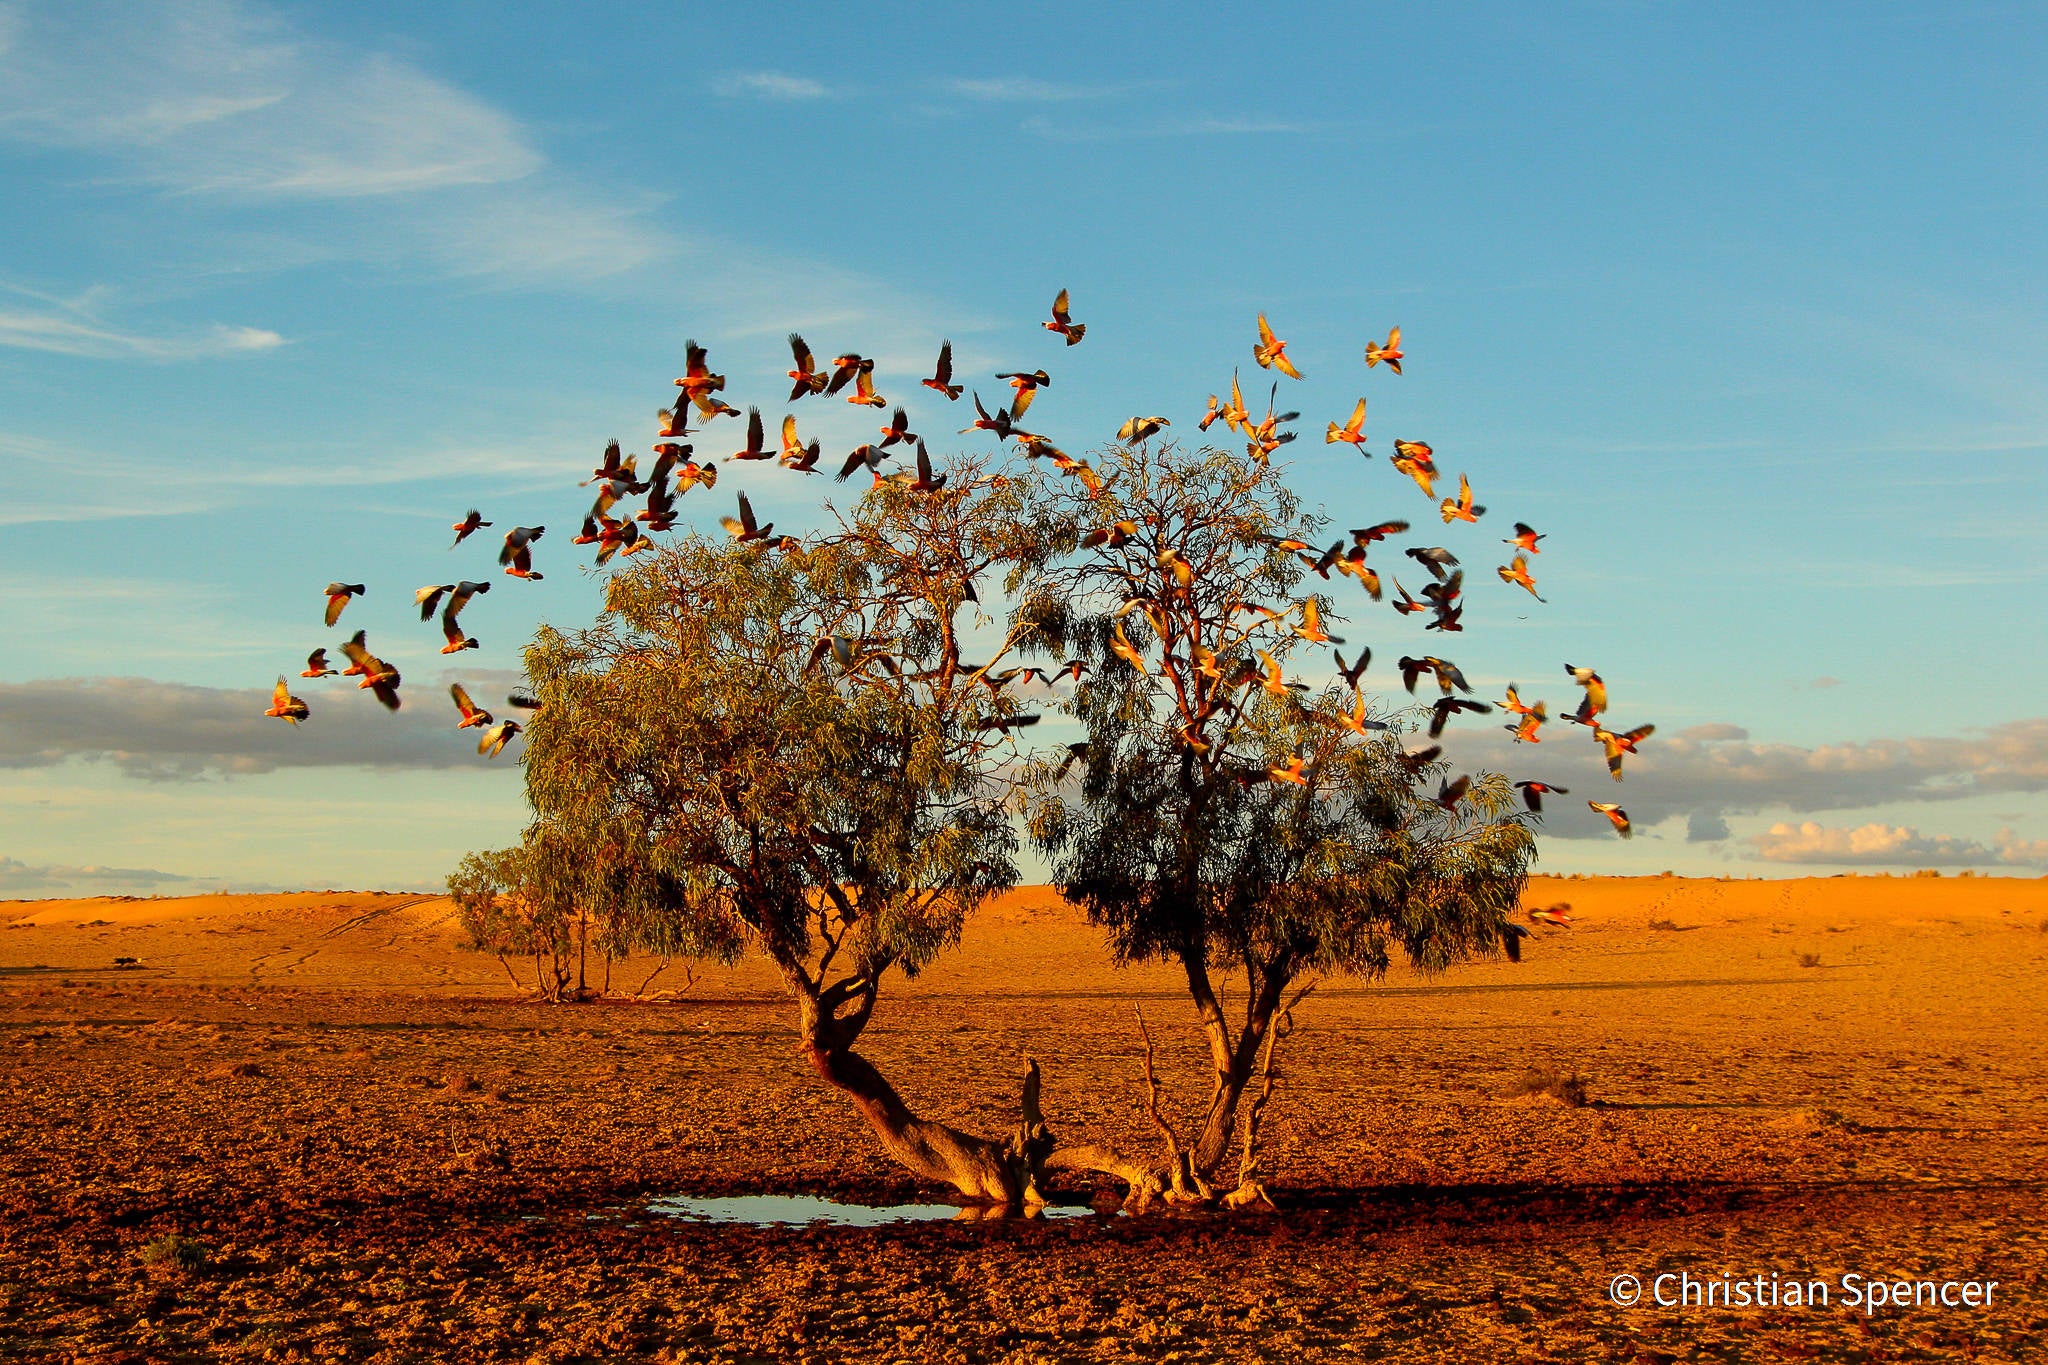 Winner of the "Animal Habitat" category, 2021 Australian Geographic Nature Photographer of the Year awards.